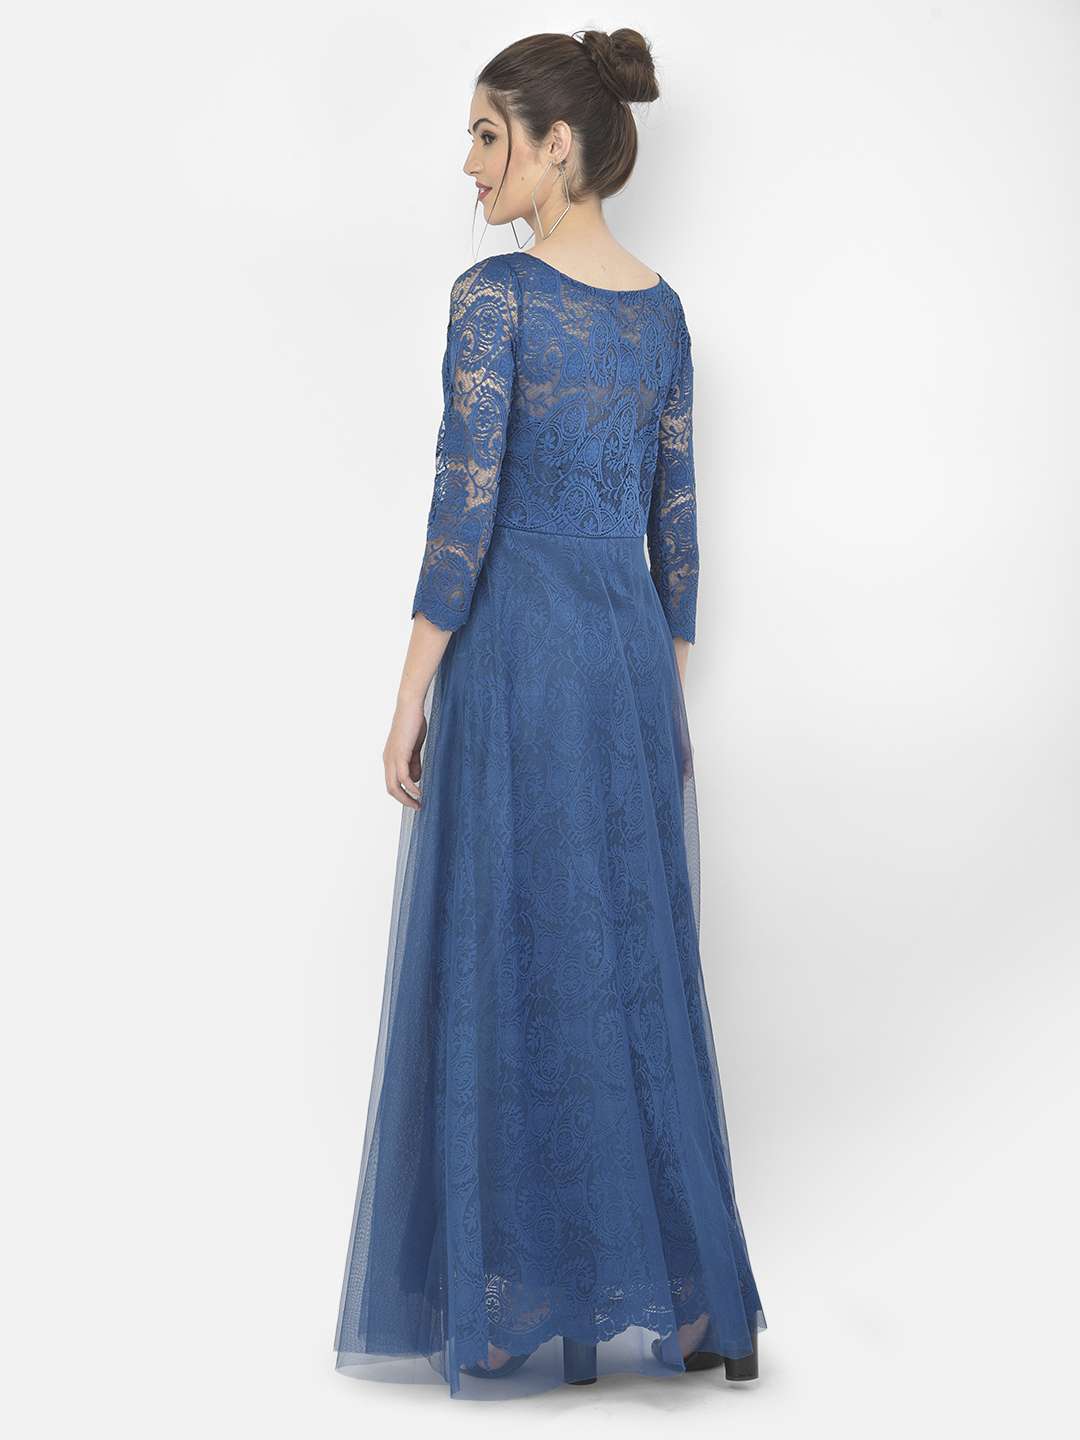 Buy Vero Moda Blue Lace Belted Dress - Dresses for Women 1419423 | Myntra